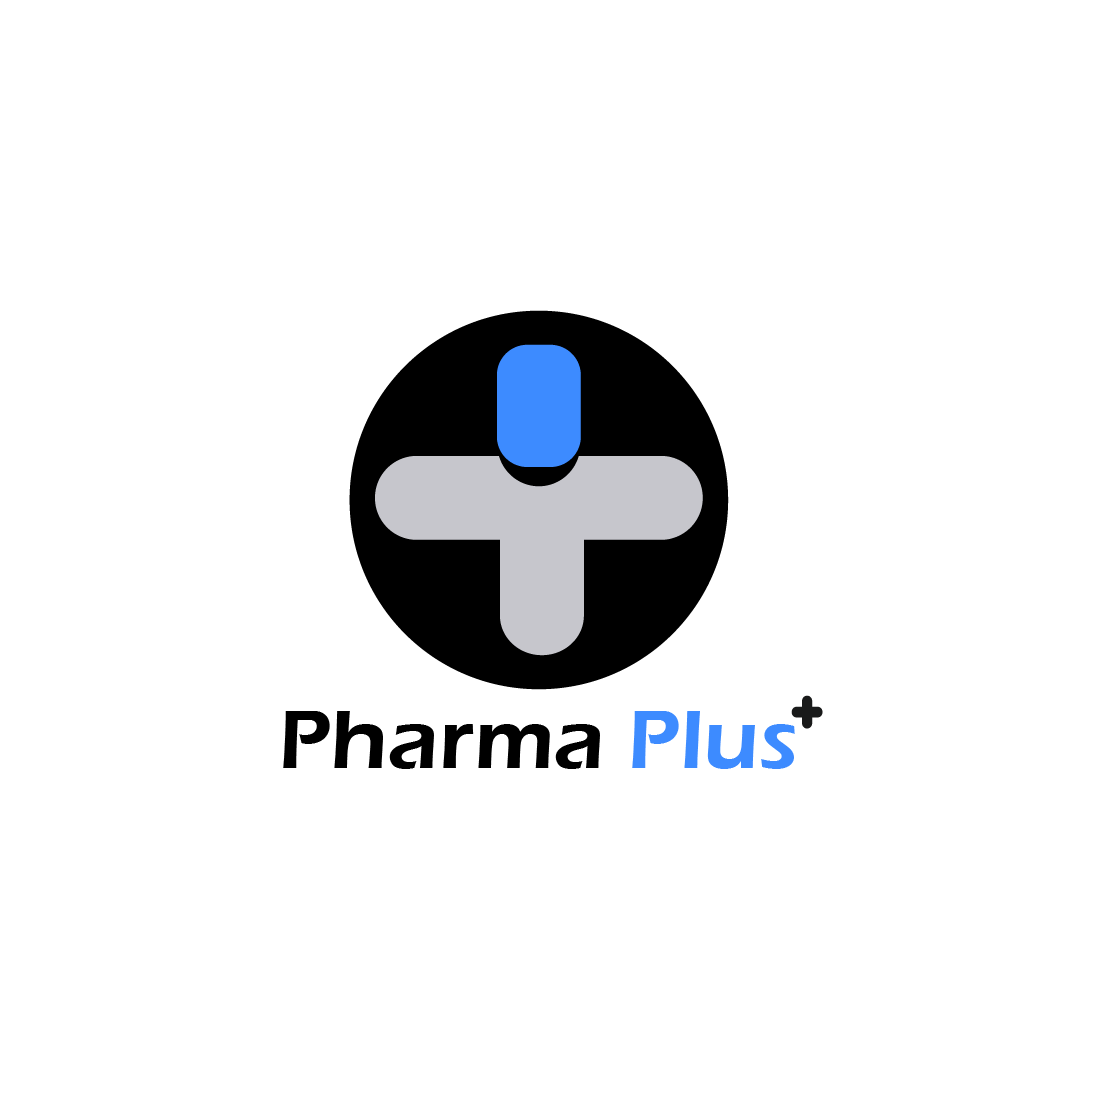 Pharma Plus Logo Bundle main cover.